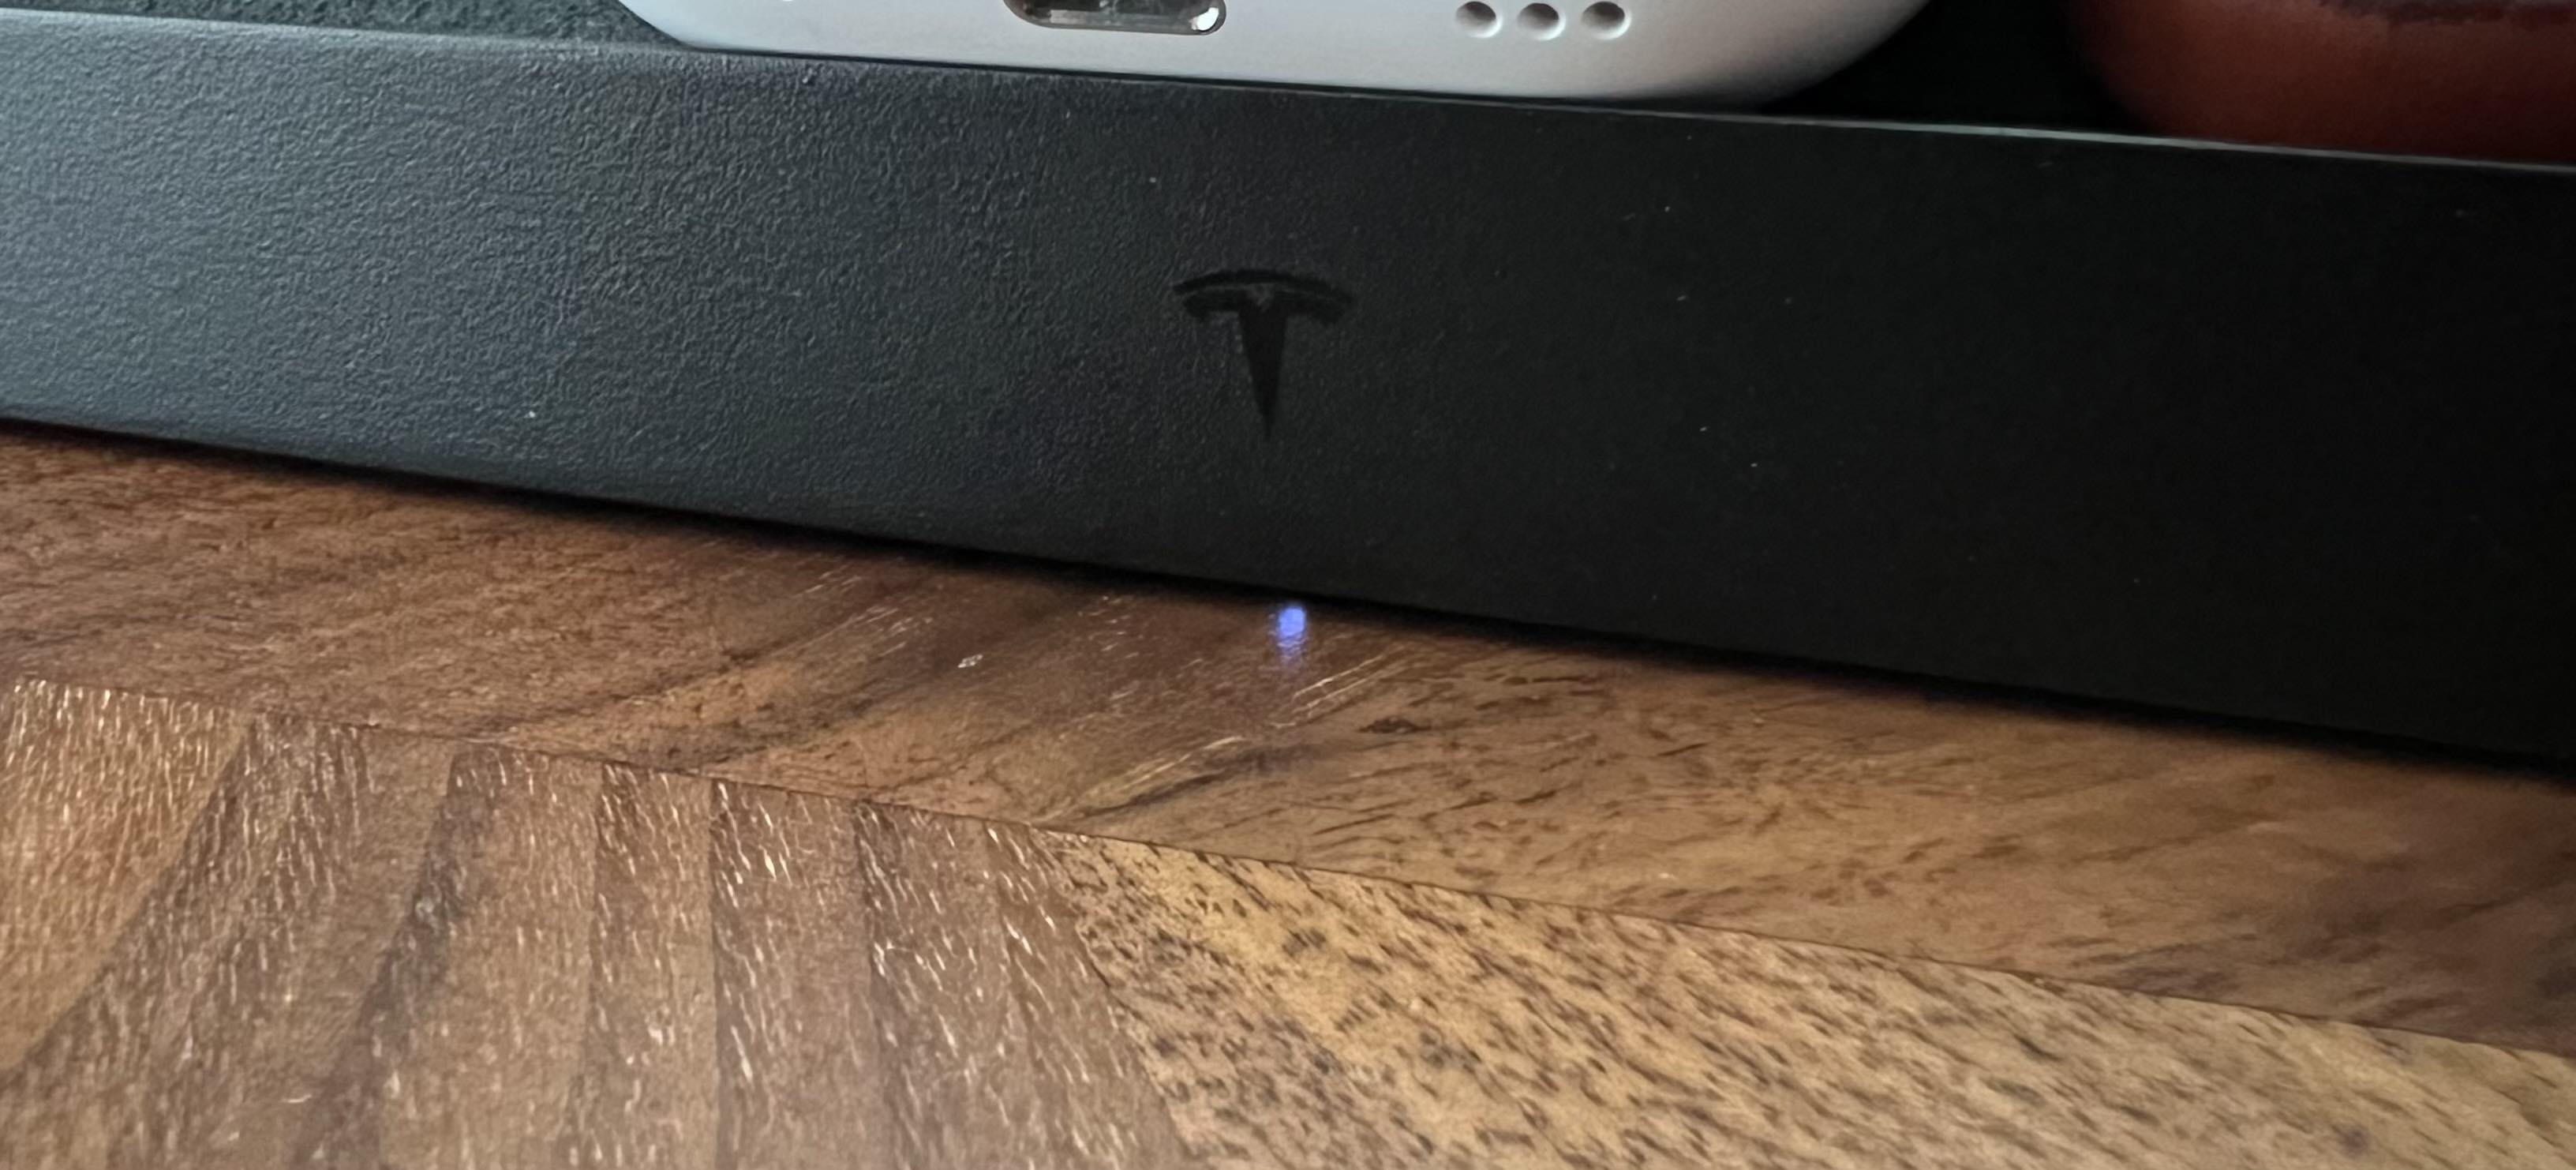 Tesla ワイヤレス充電パッドの LED インジケーター